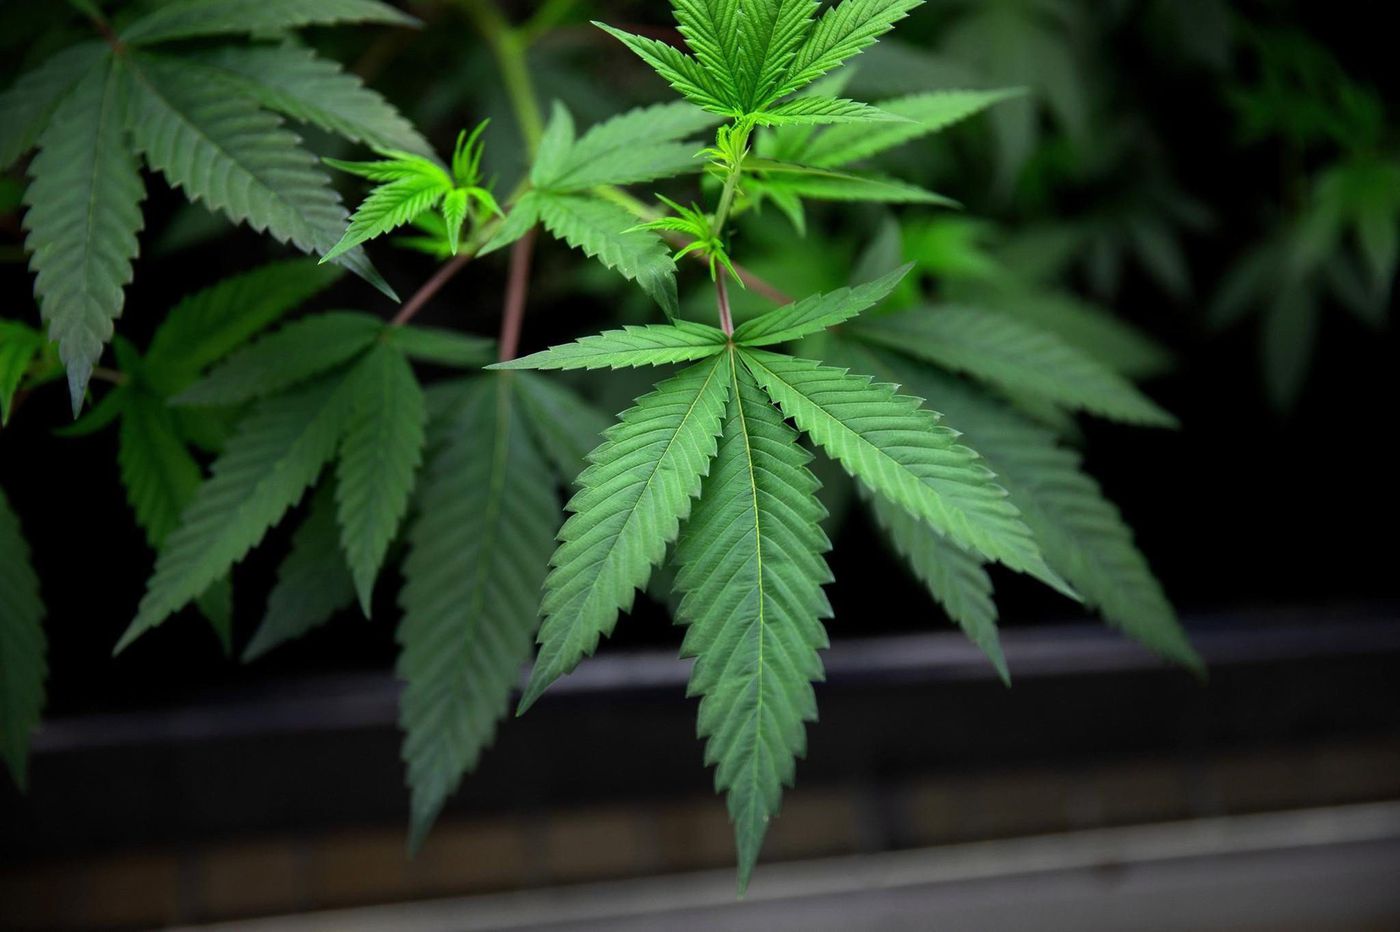 Legalized Cannabis